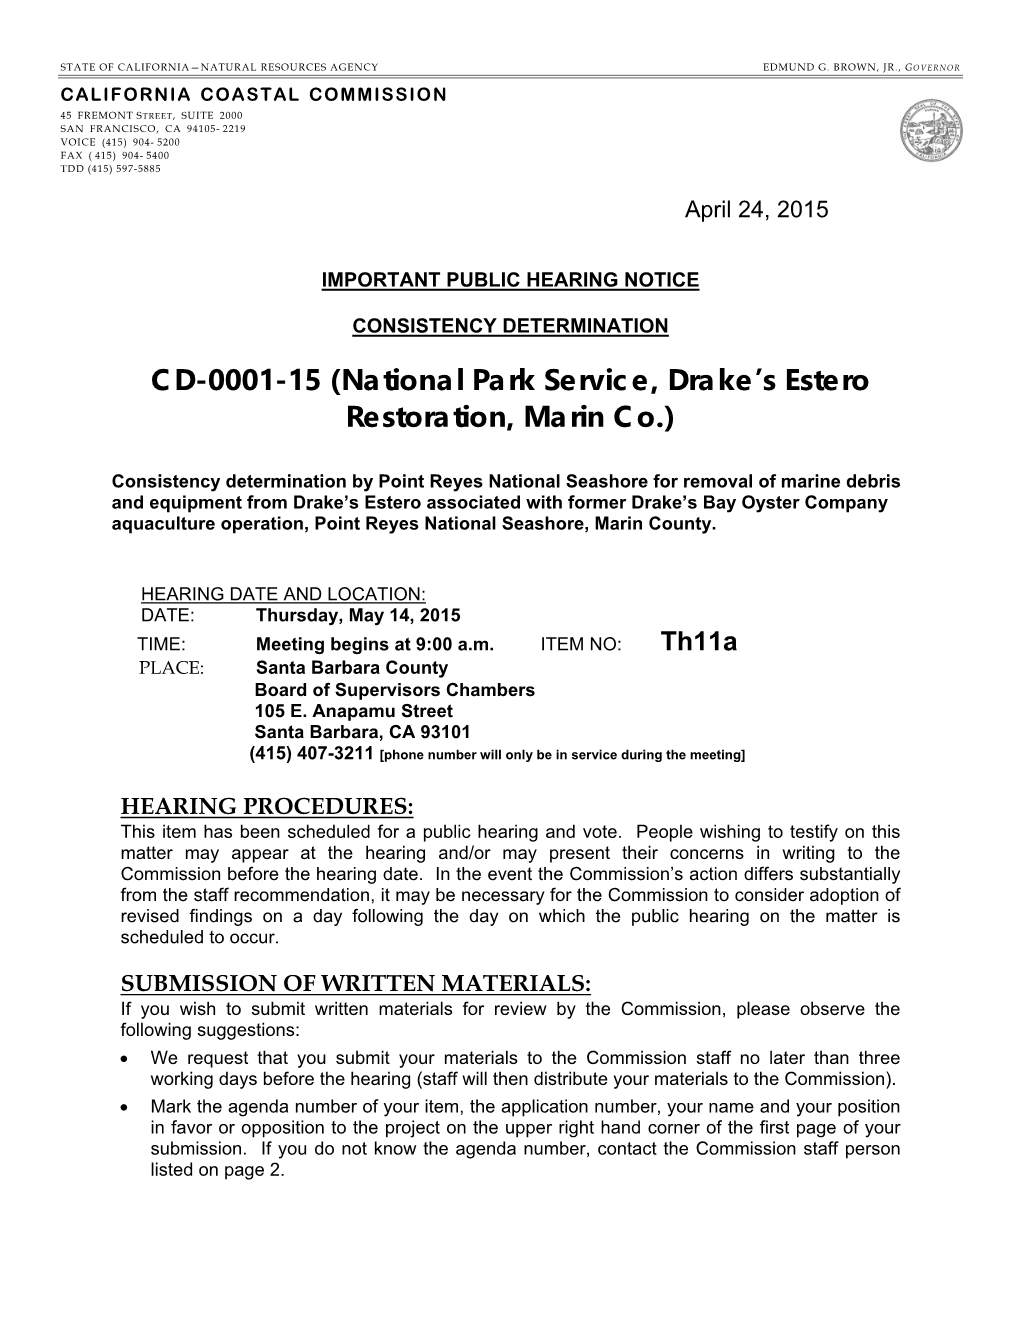 Drakes Estero Restoration Background Information: CCC